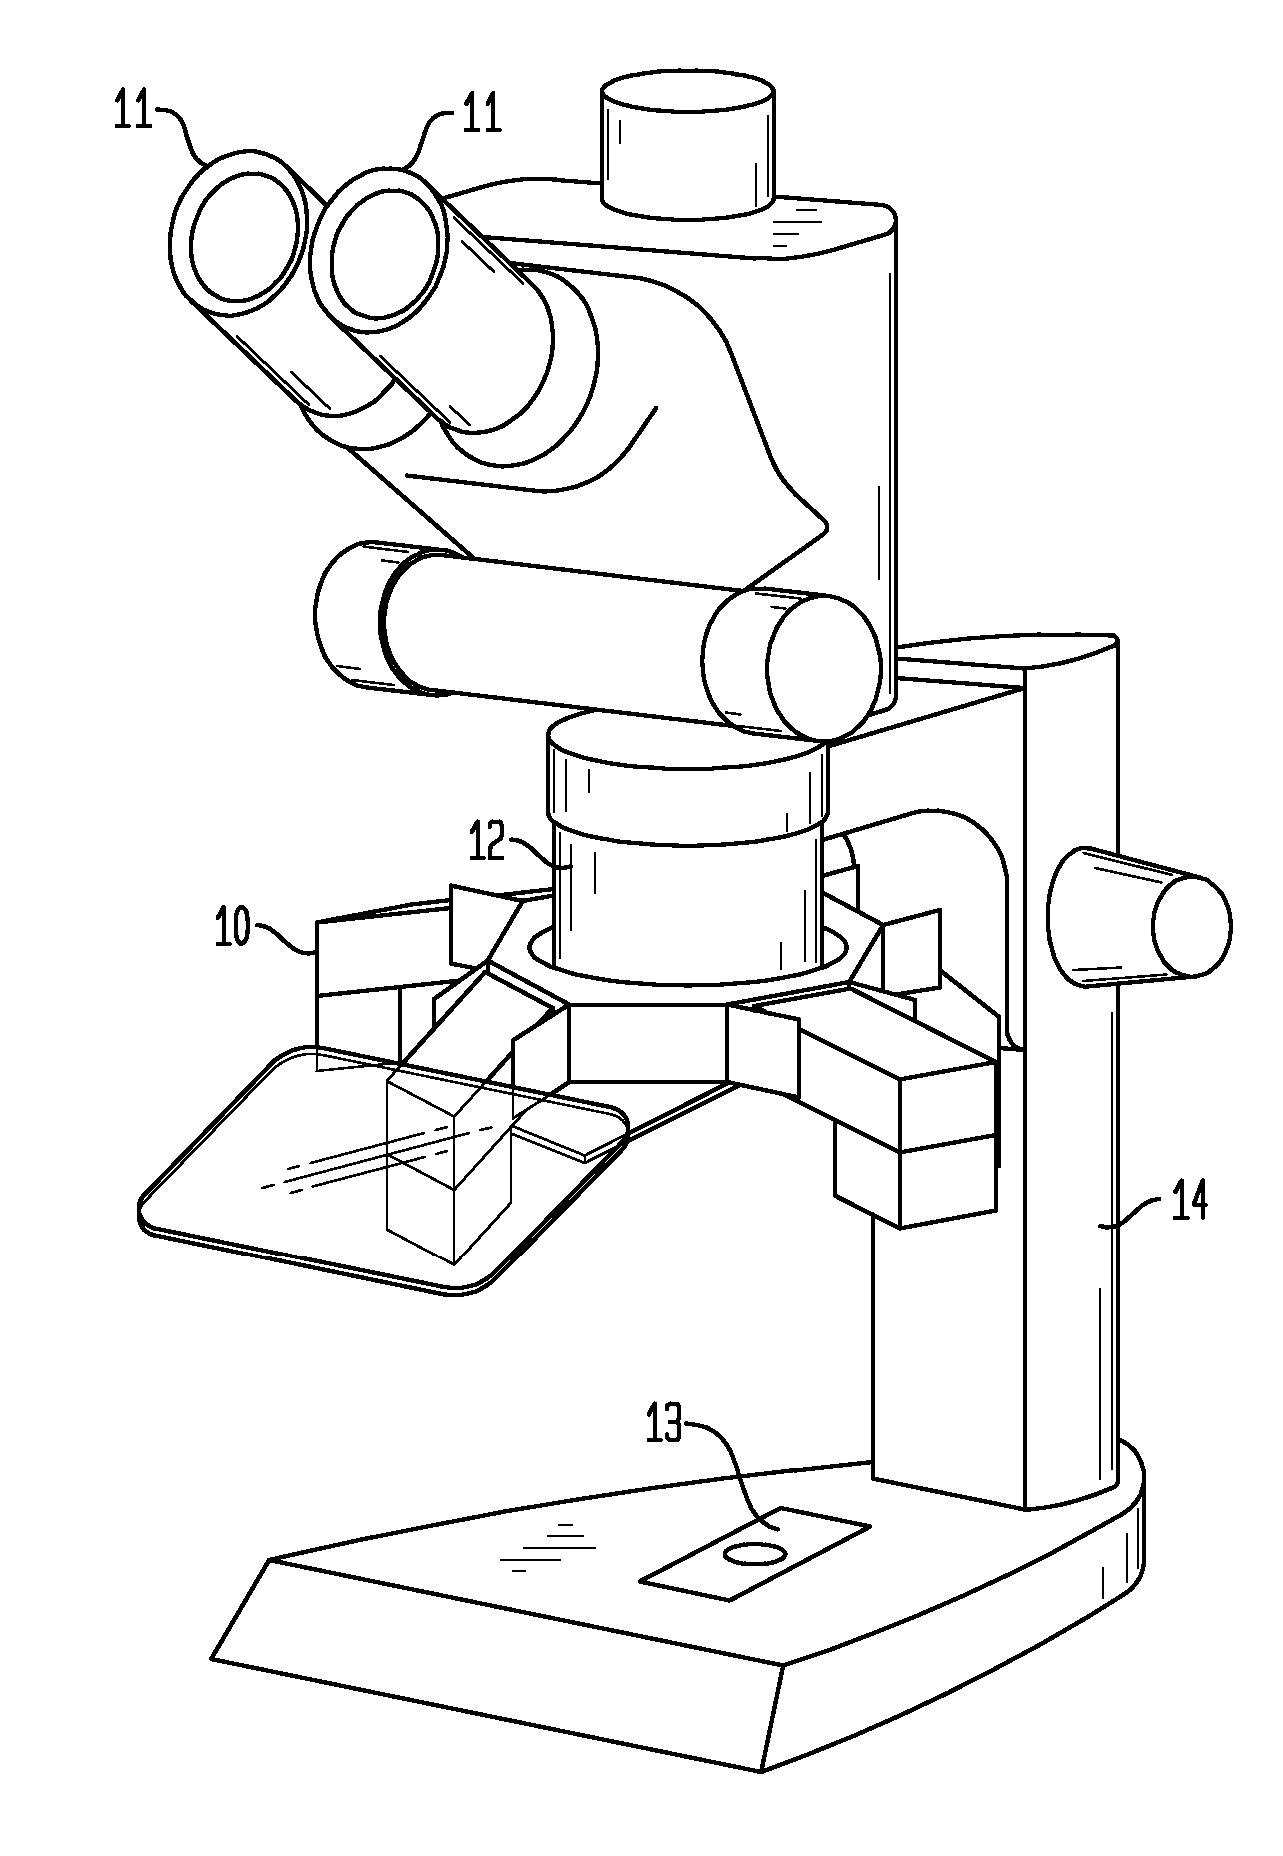 Fluorescence illumination method and apparatus for stereomicroscopes